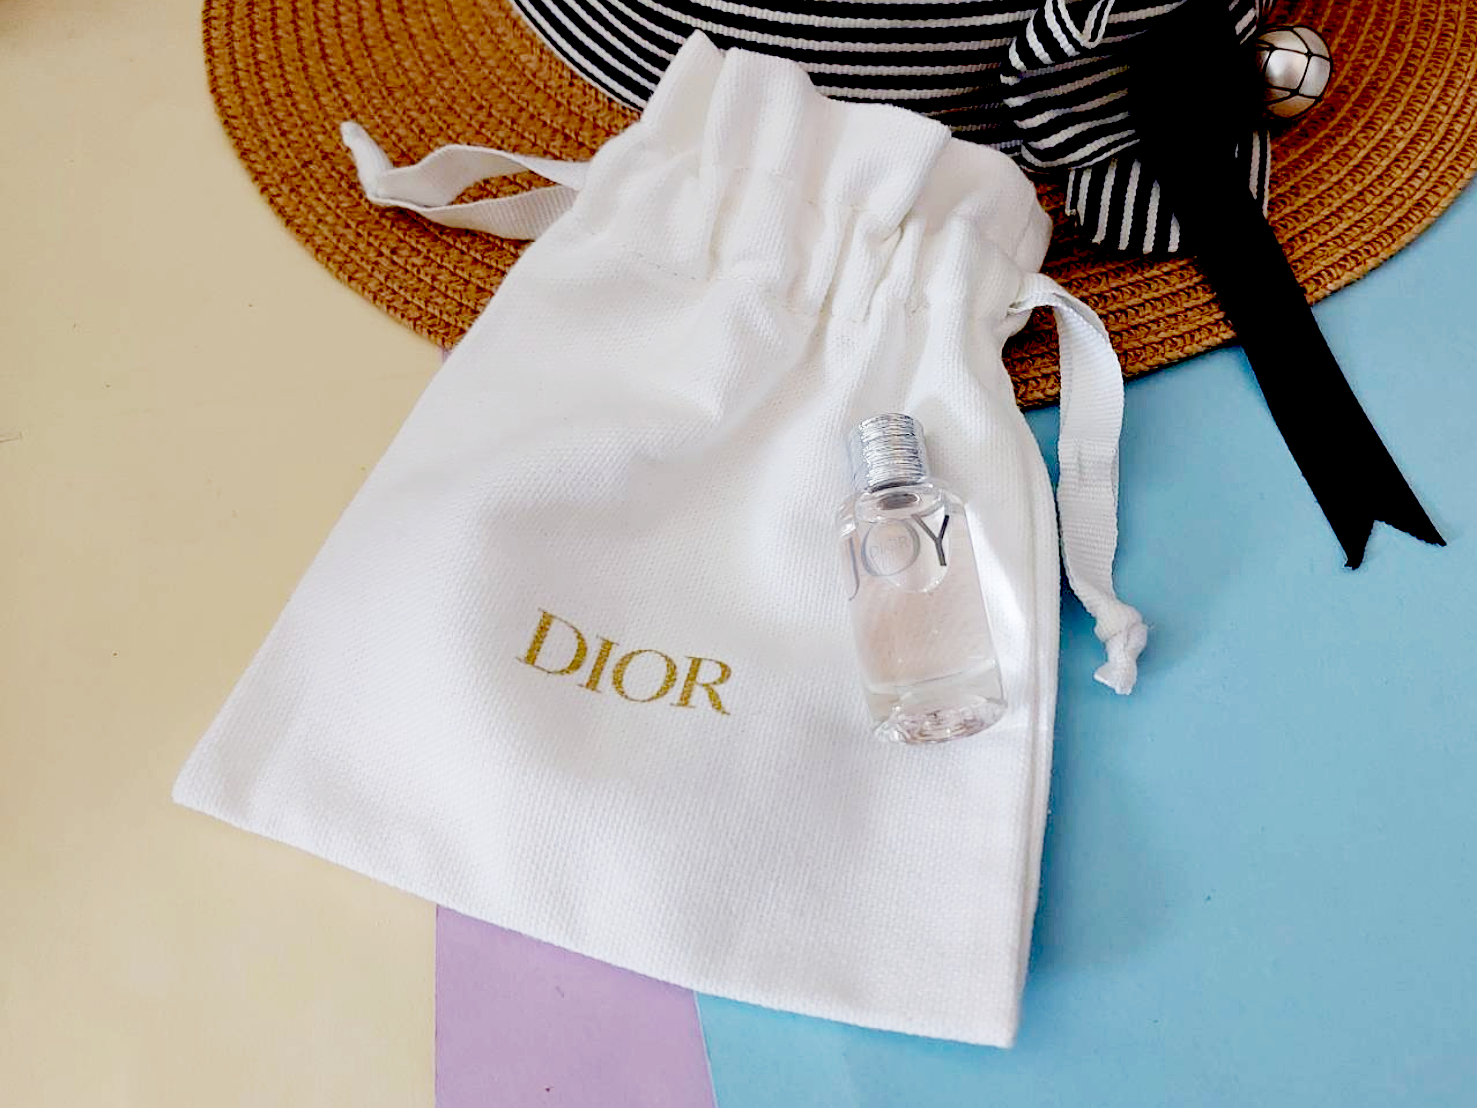 Christian dior set Dior Joy 5ml with pouch